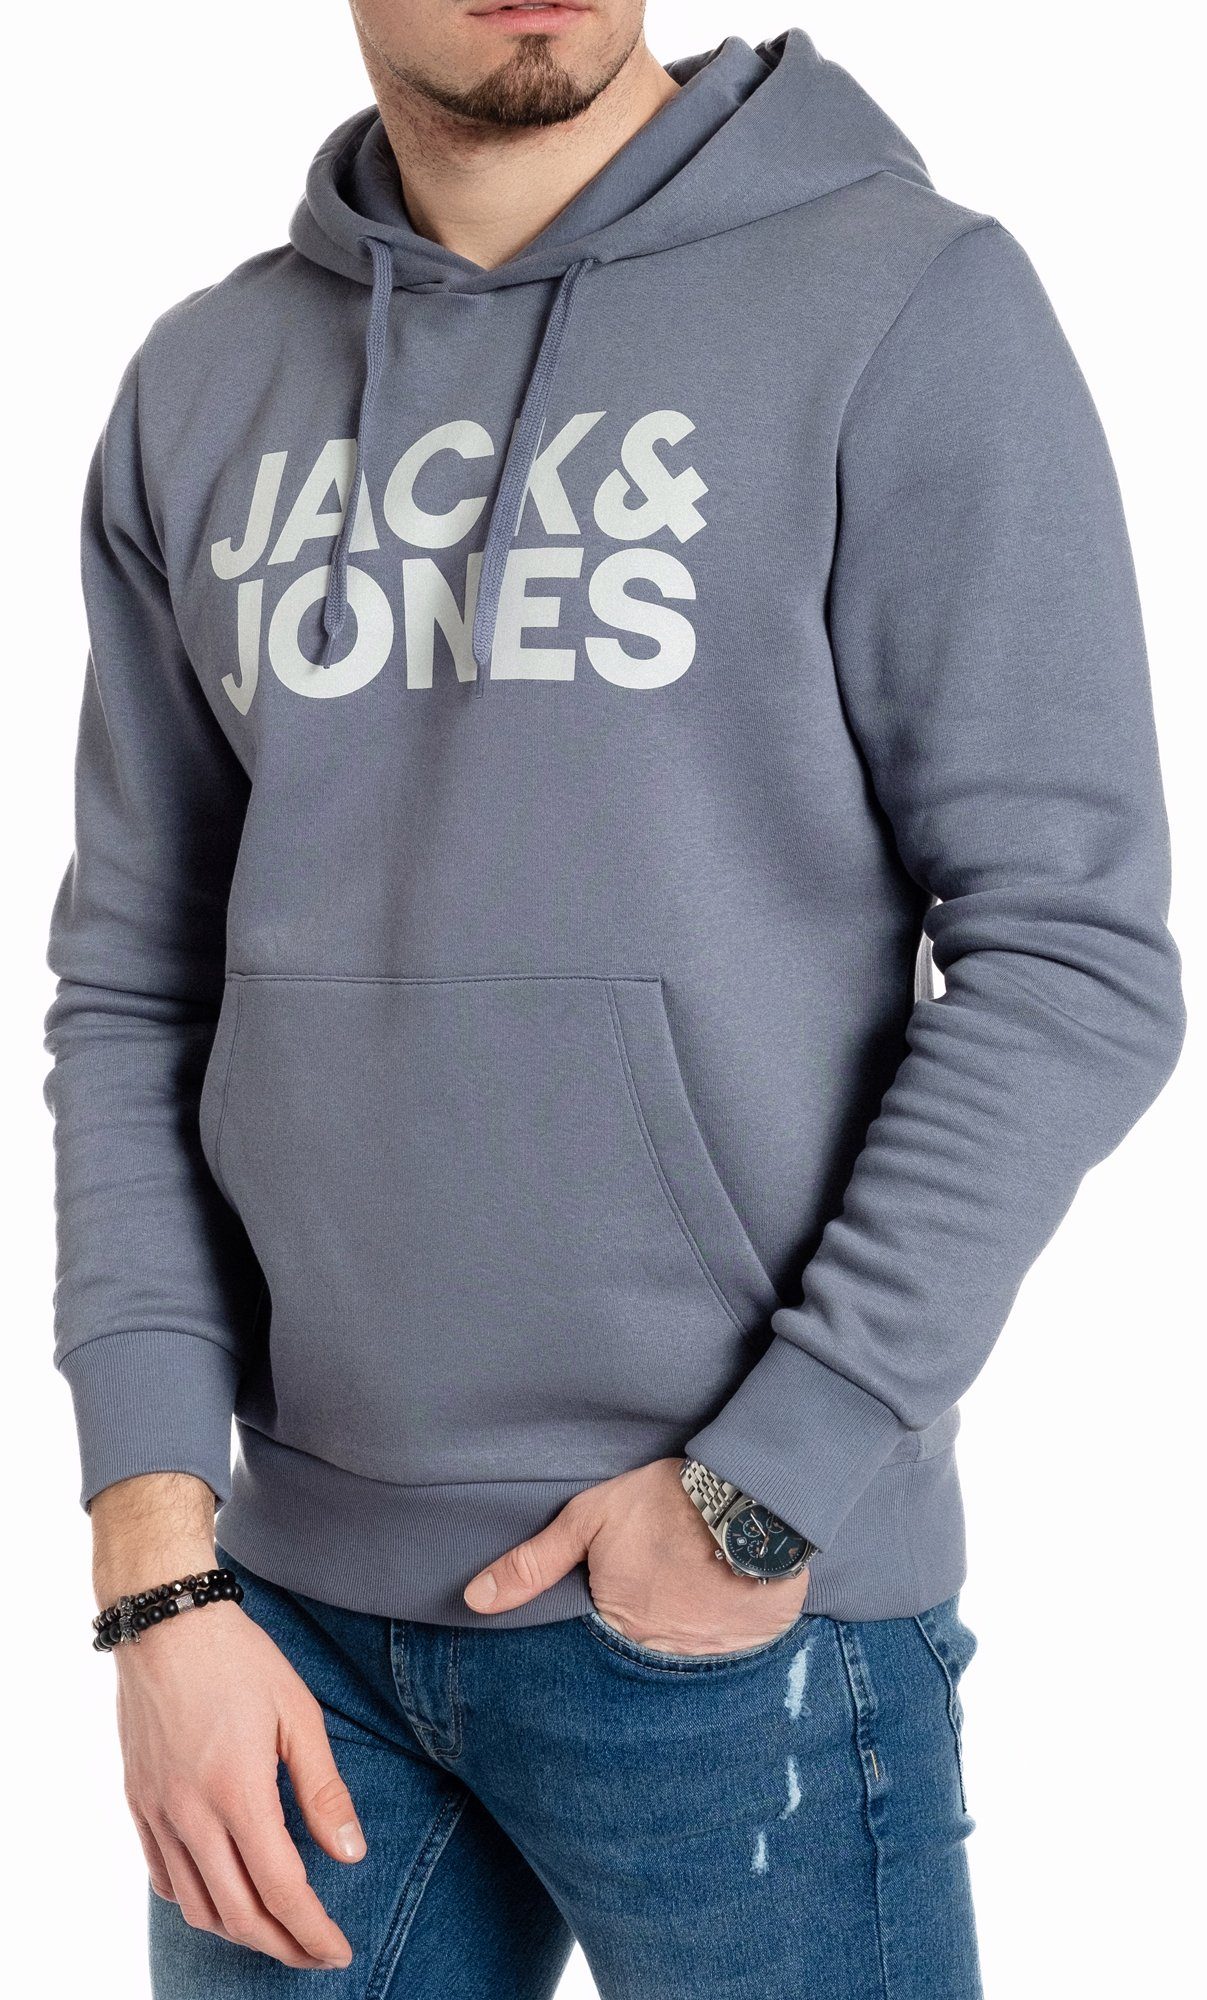 Chinablue-White Jack mit Jones Kängurutasche & Kapuzensweatshirt